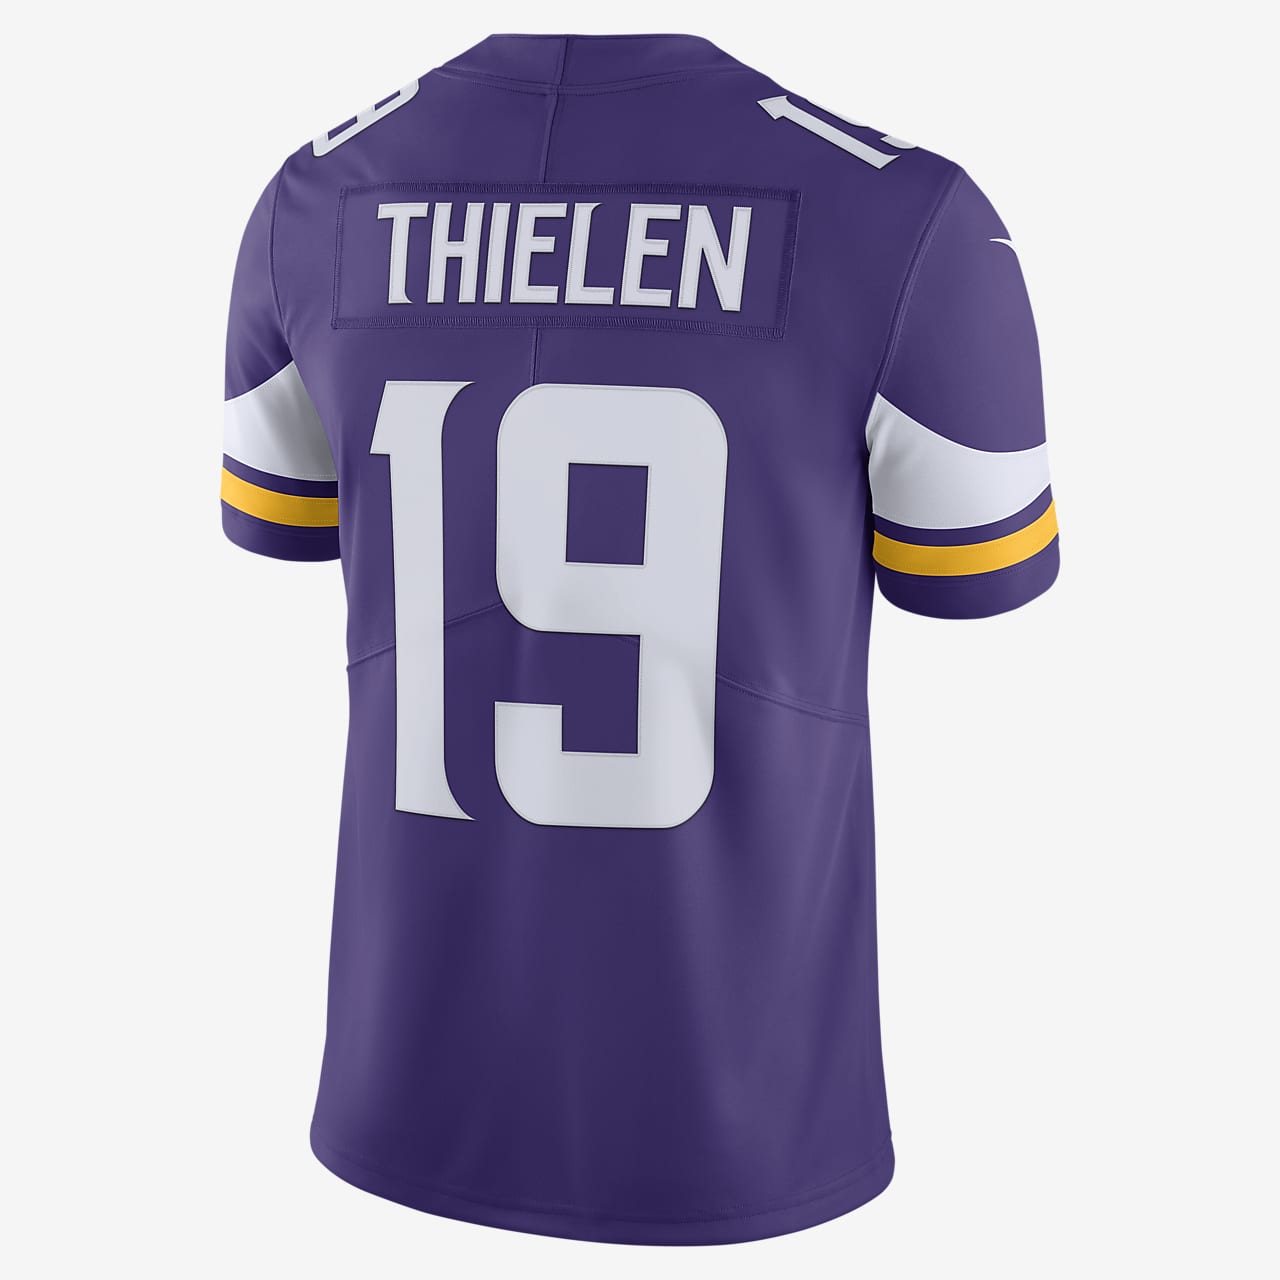 NFL Minnesota Vikings Limited (Adam Thielen) Men's Football Jersey.